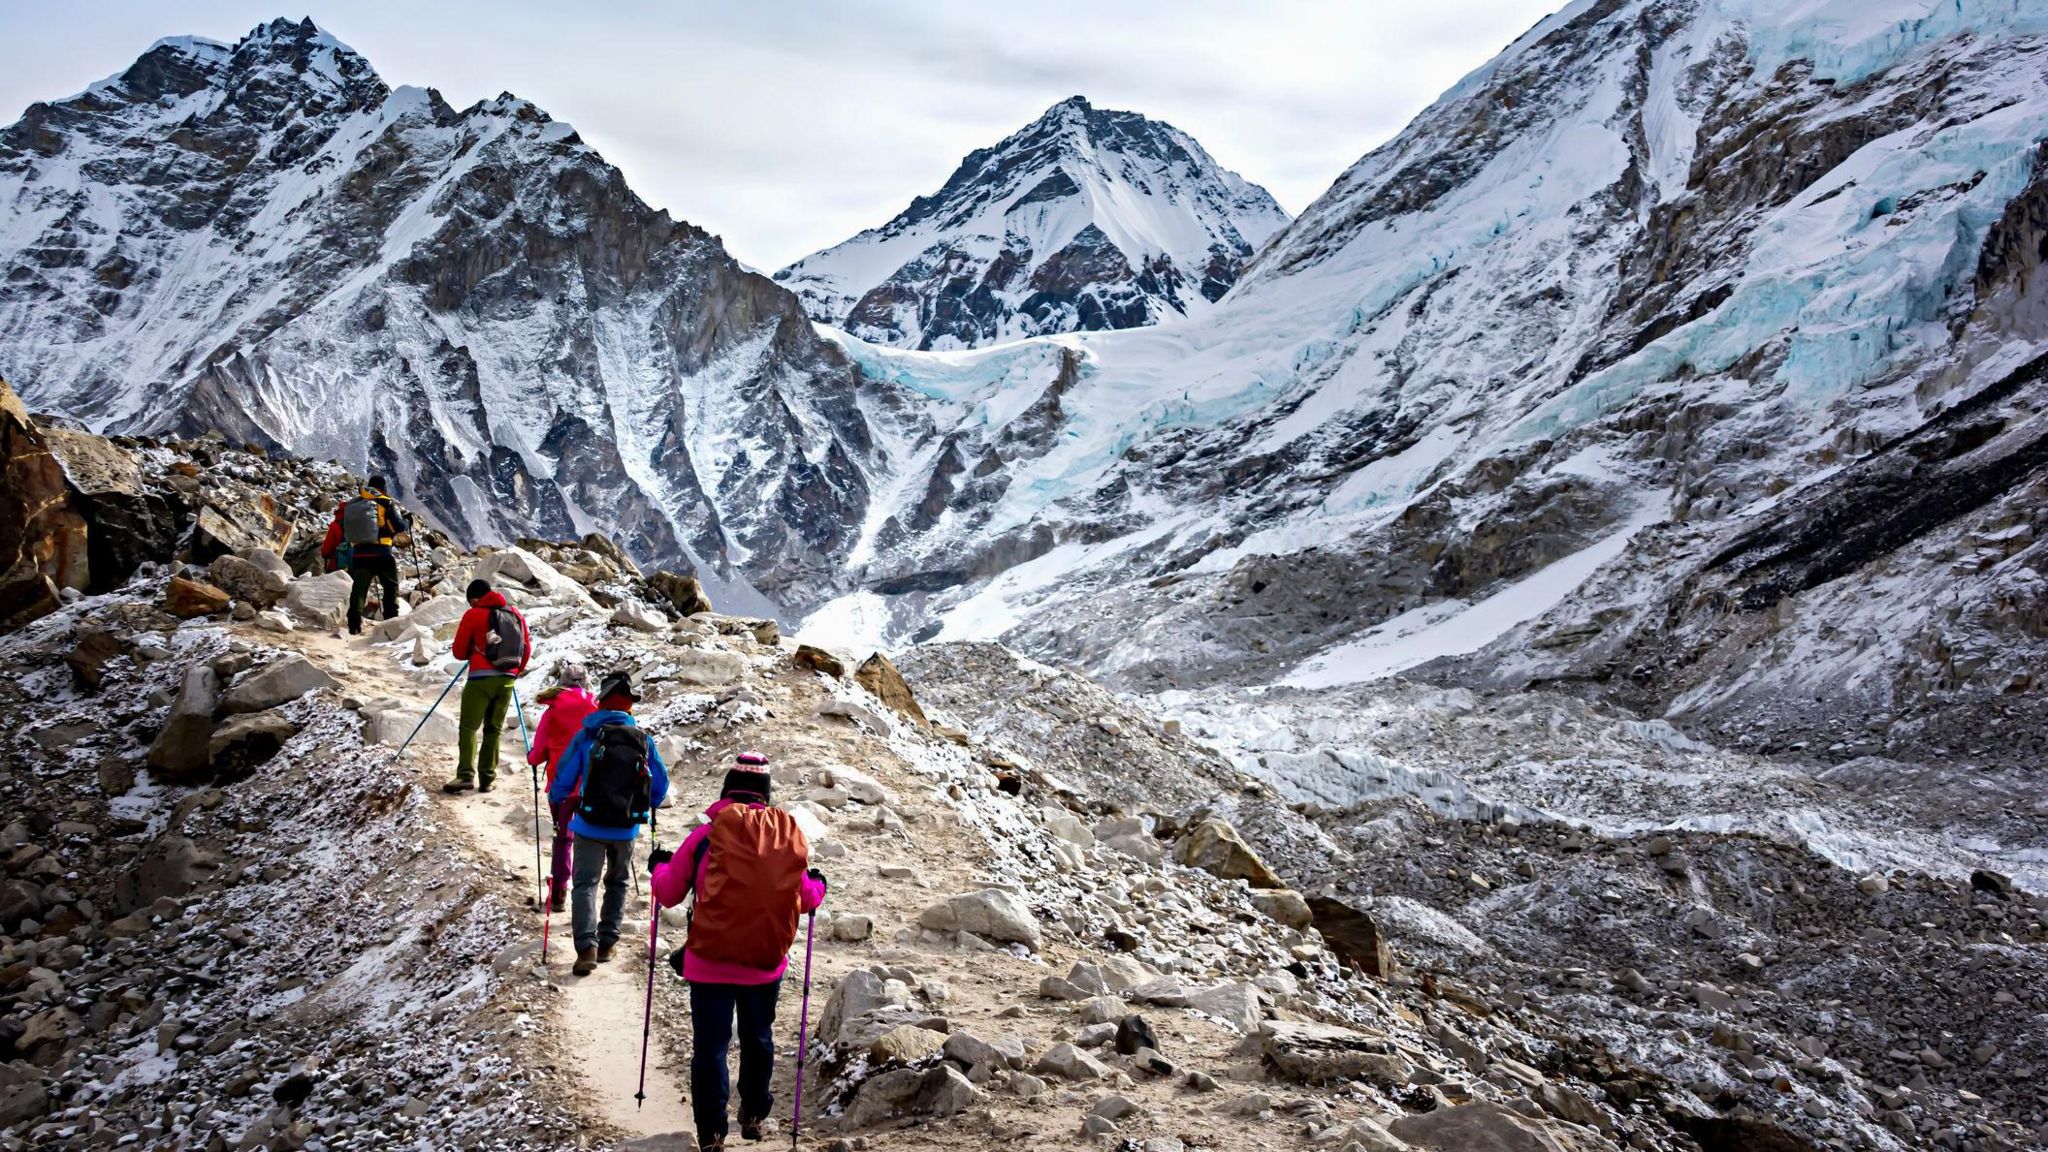 People walking up Mount Everest